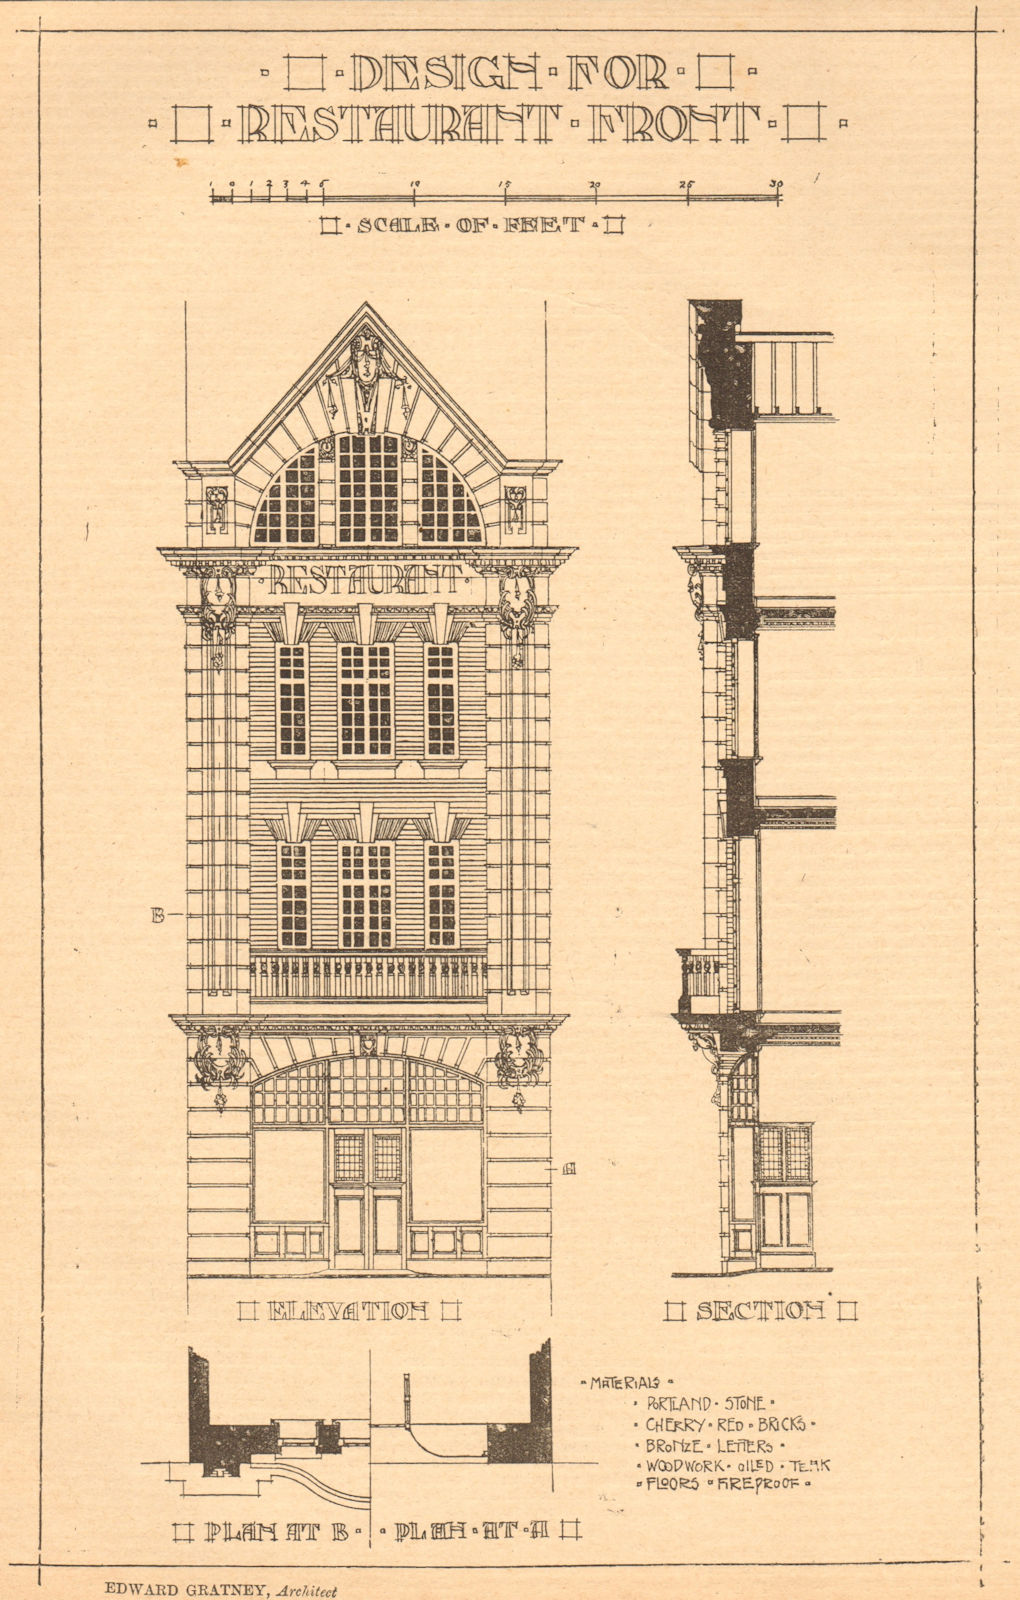 Associate Product Restaurant front design, Edward Gratney, Architect. Elevation plan section 1903